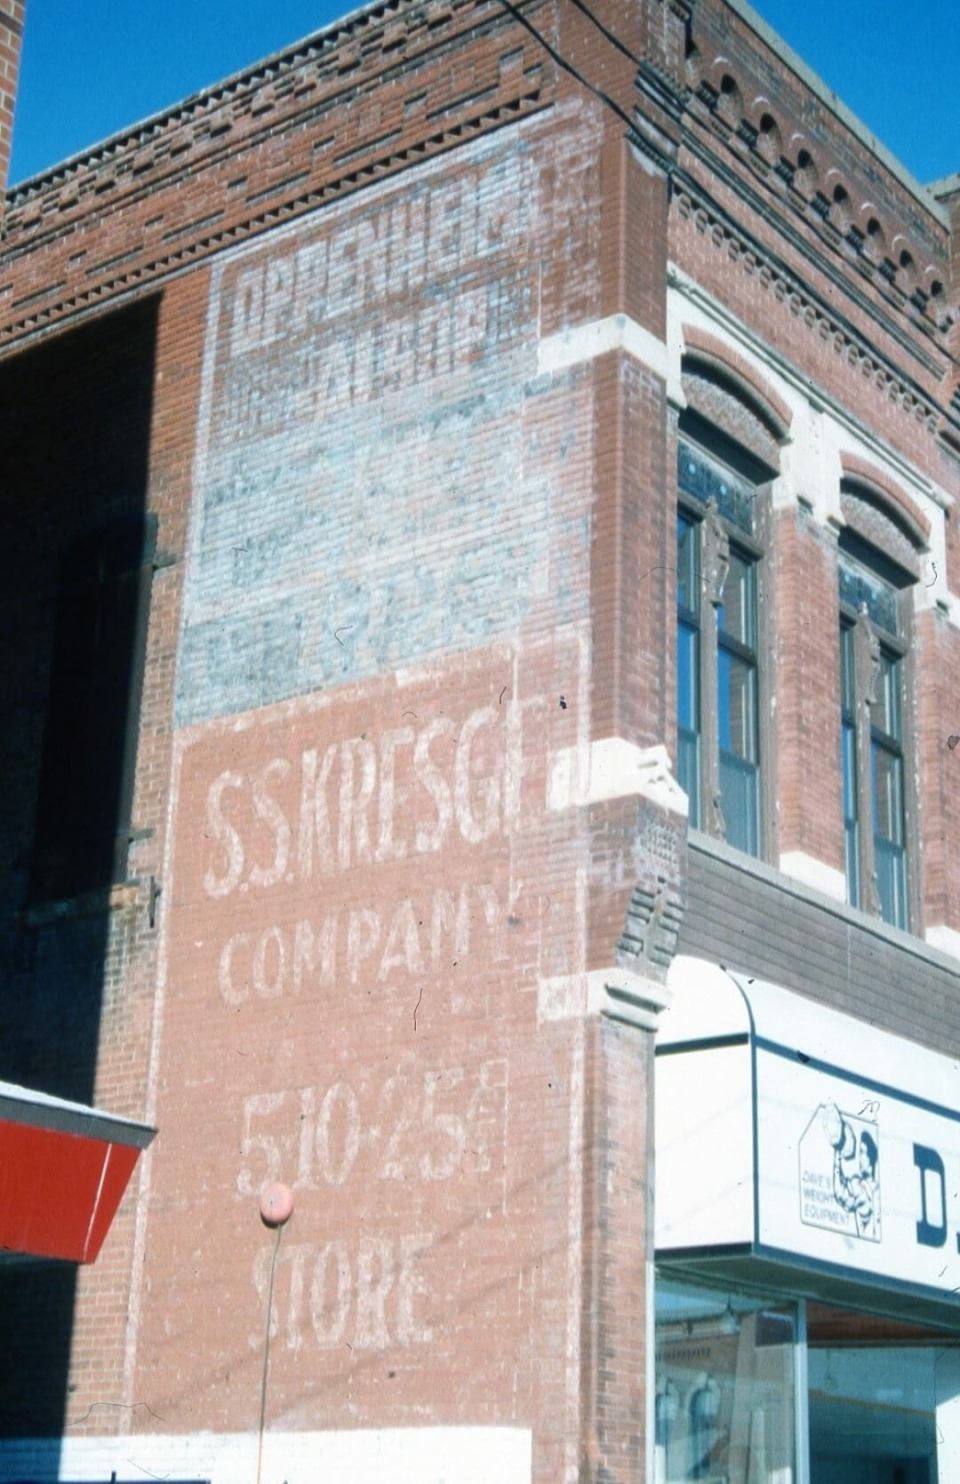 Signage of the Frankel Buildings prior business residents, Oppenheimer-Alsop enterprise and S.S. Kresge Company.